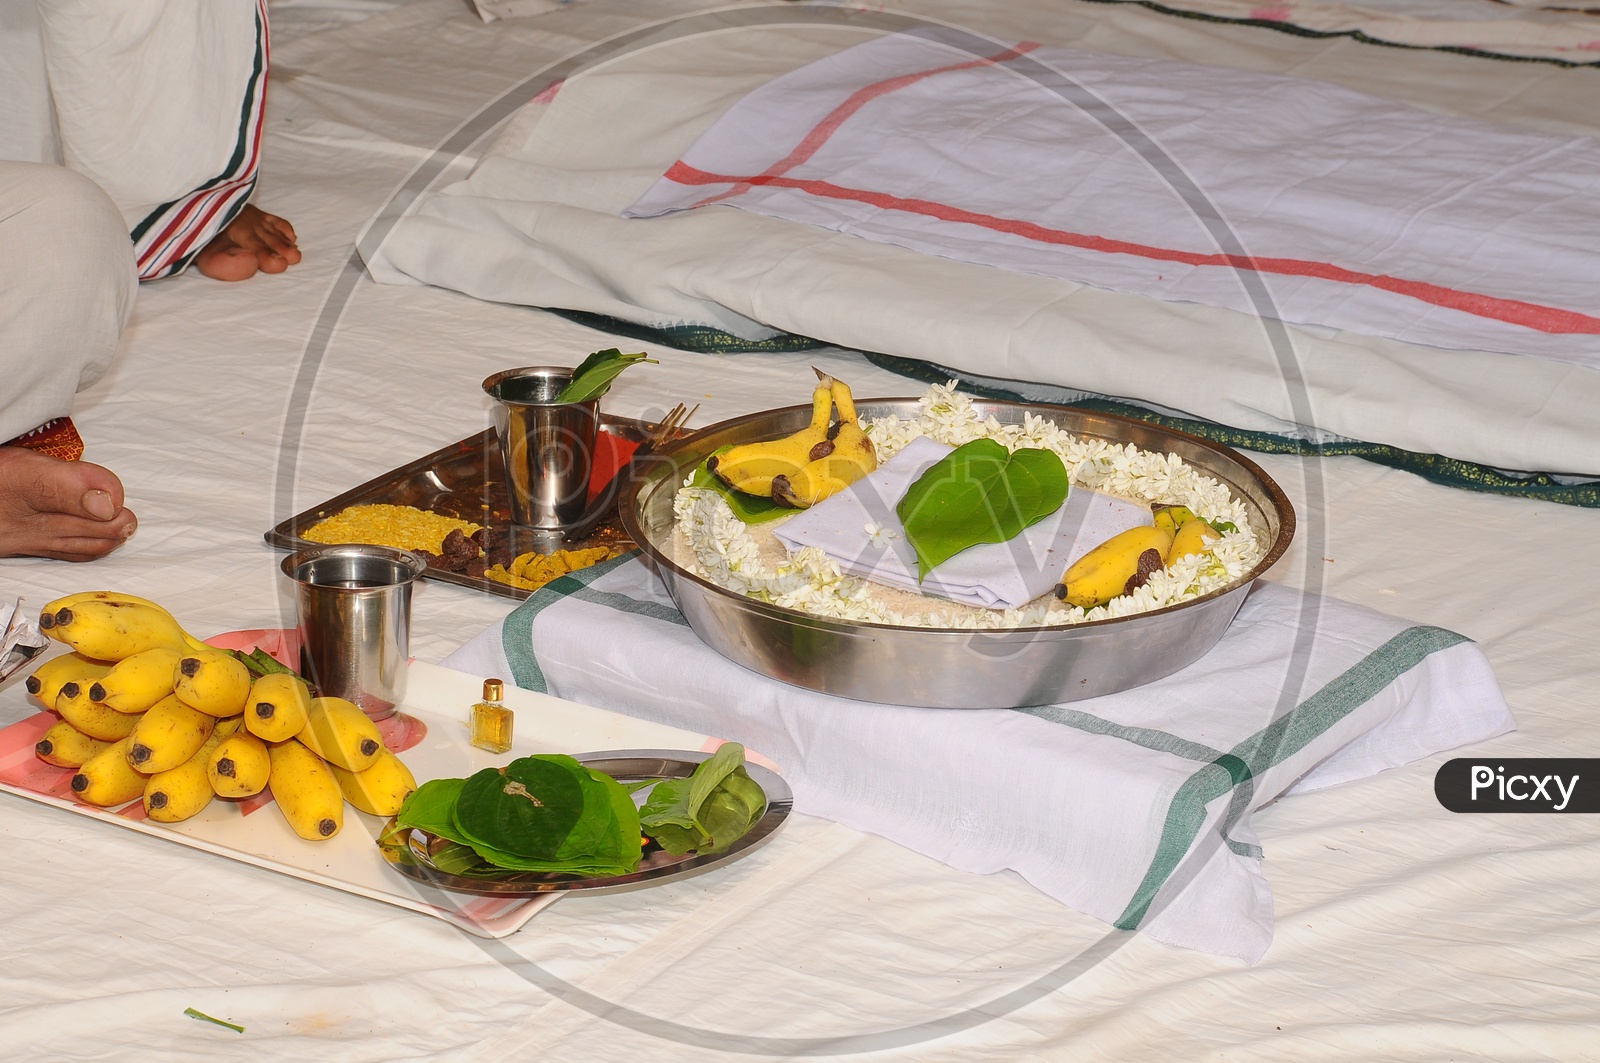 Hindu traditional pooja items